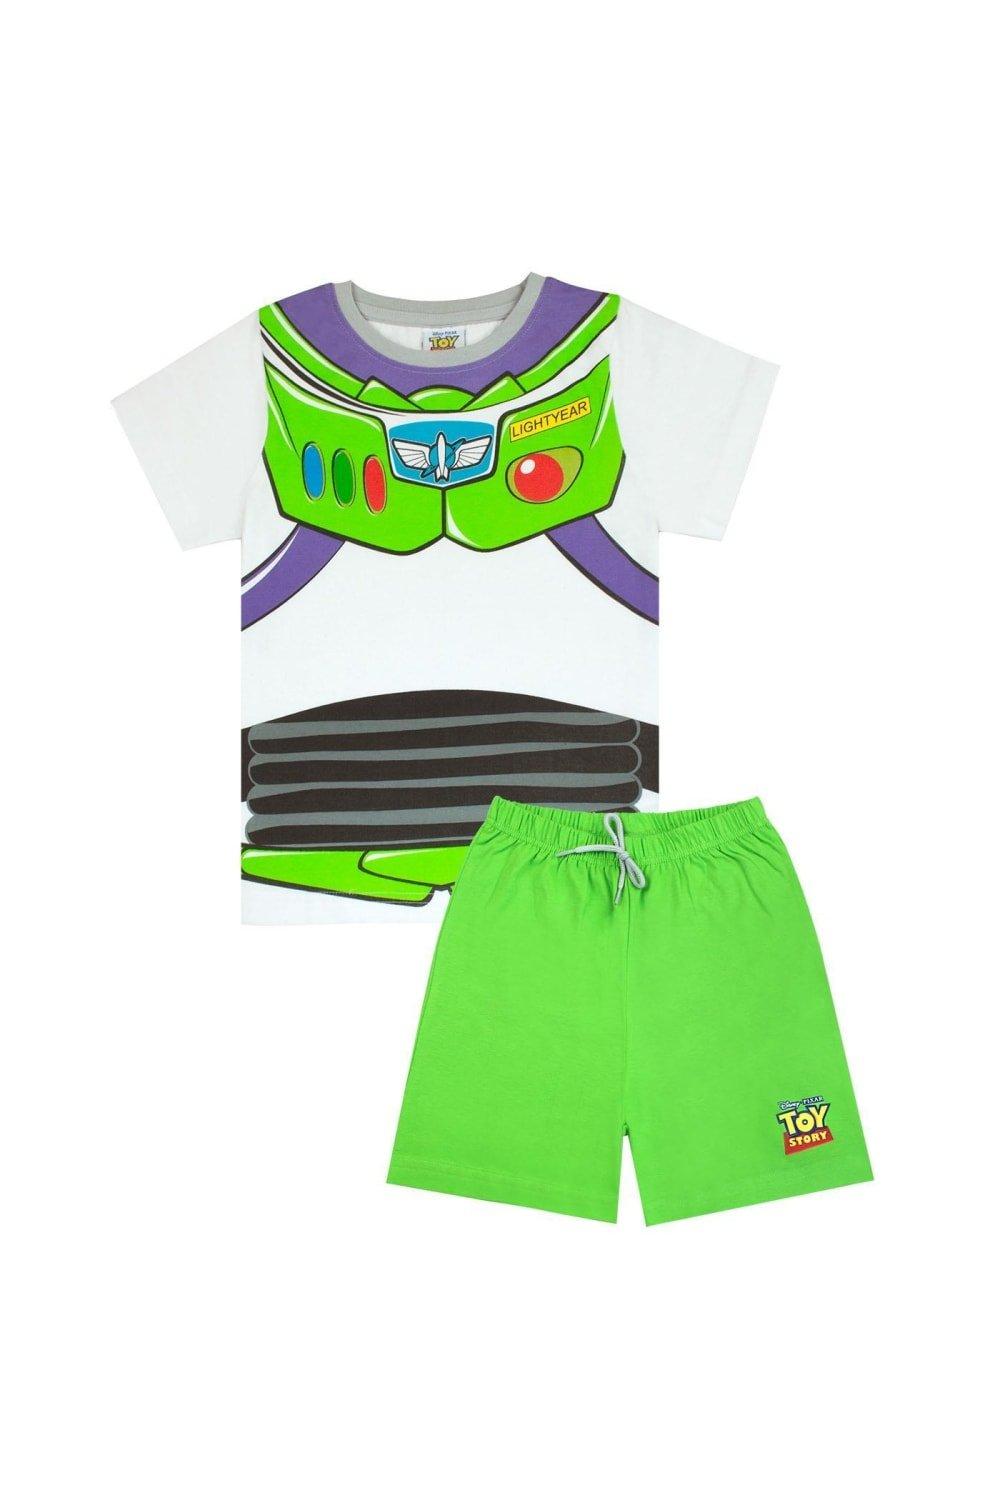 Buzz Lightyear Costume Pyjama Set